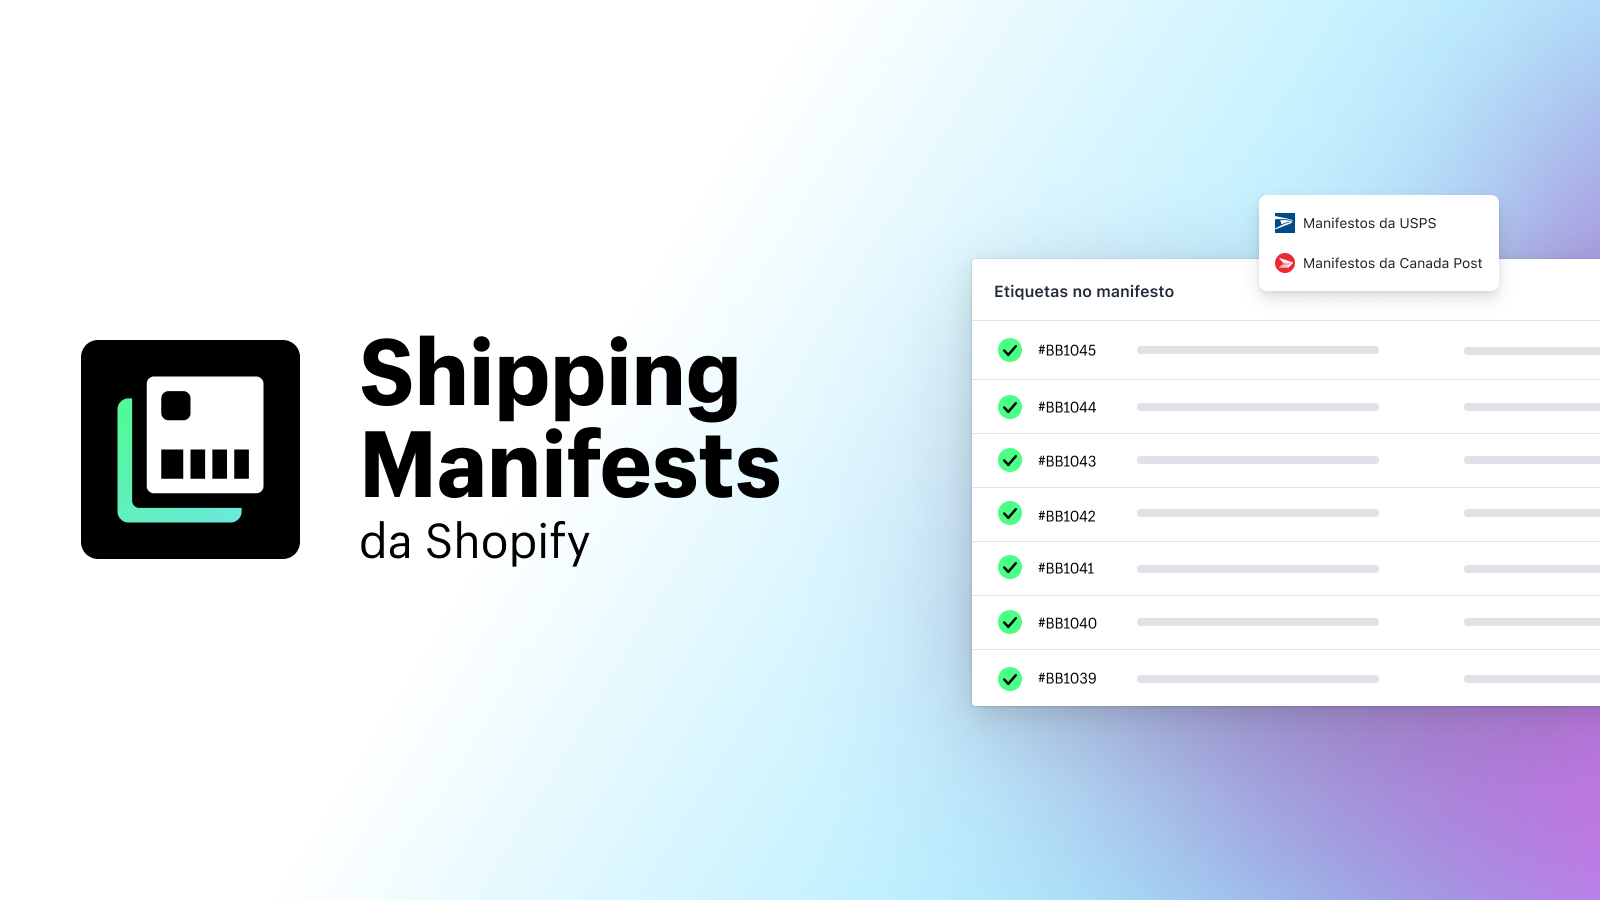 Shipping Manifests da Shopify